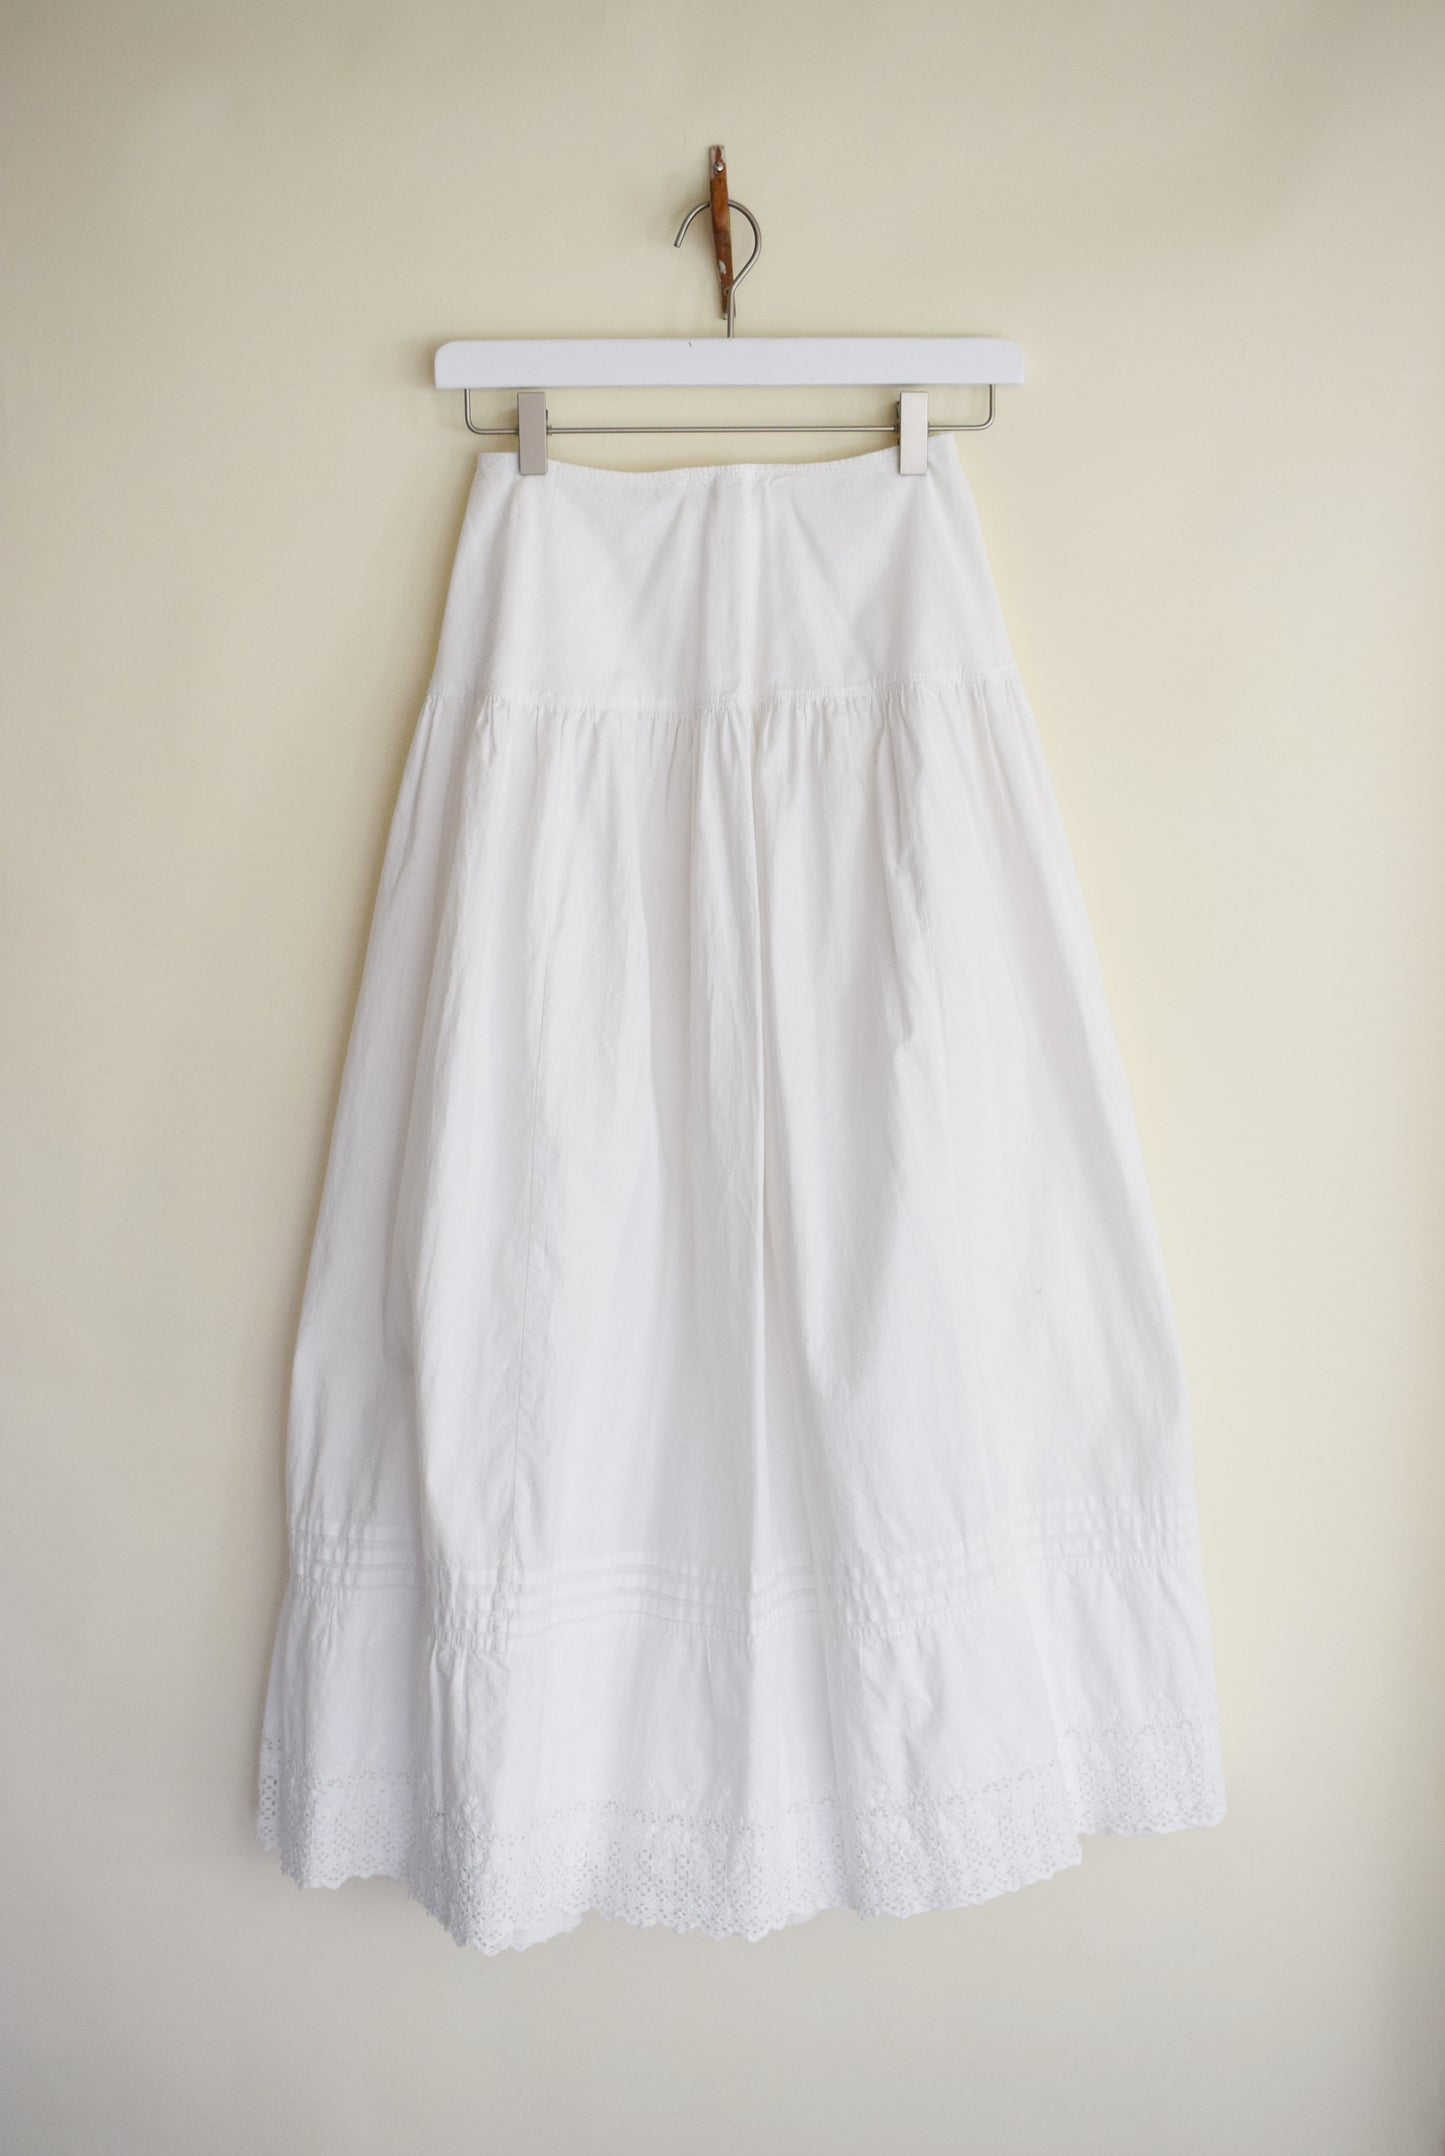 Antique White Cotton Petticoat